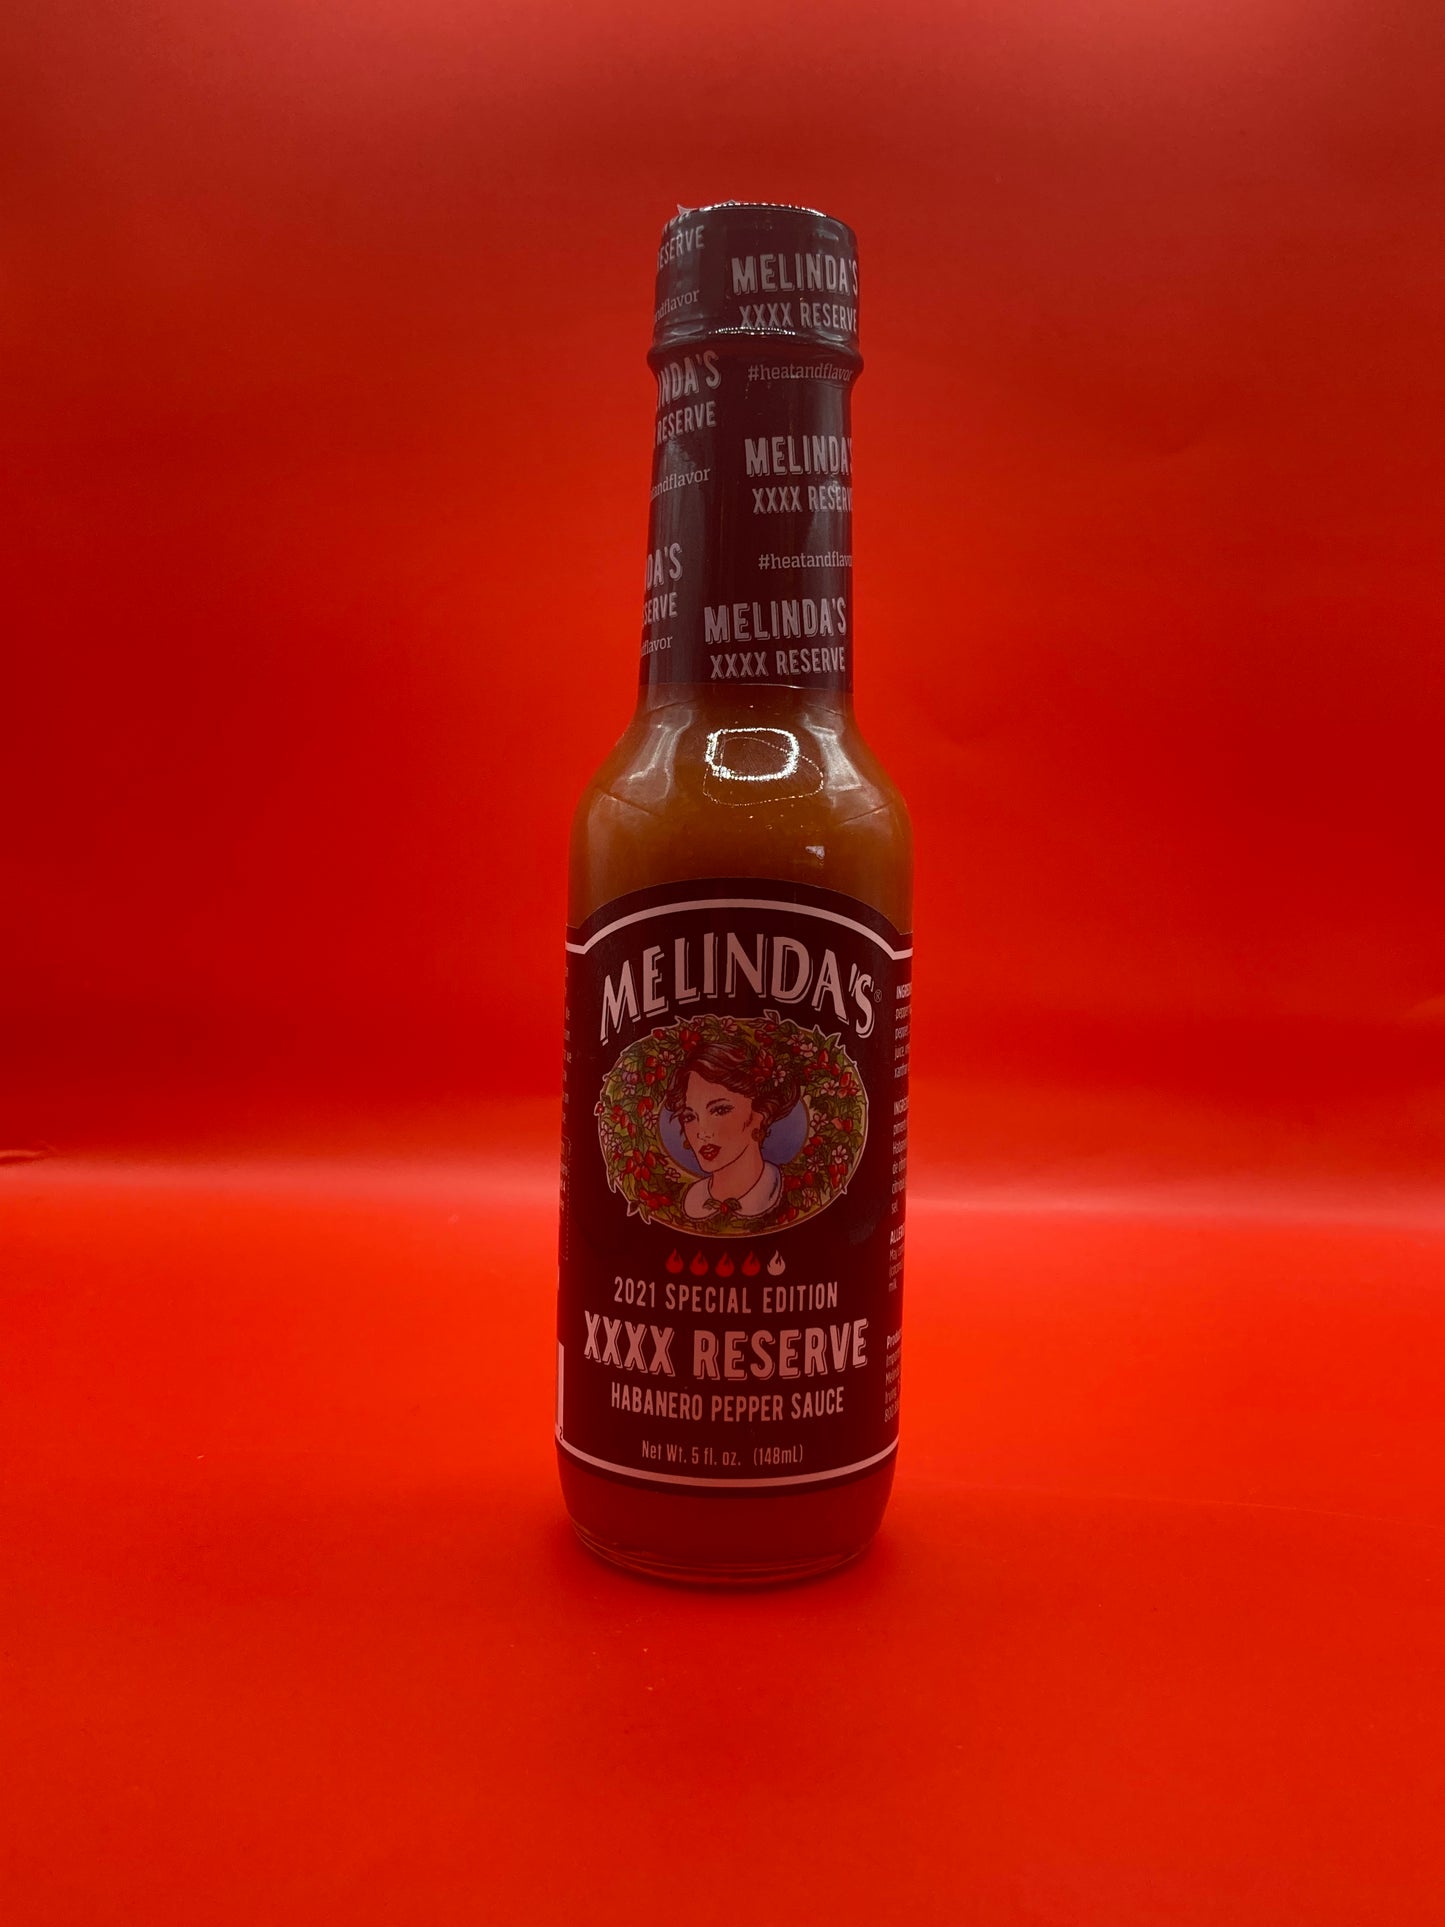 Melinda's 2021 Special Edition XXXX Reserve Habanero Pepper Sauce